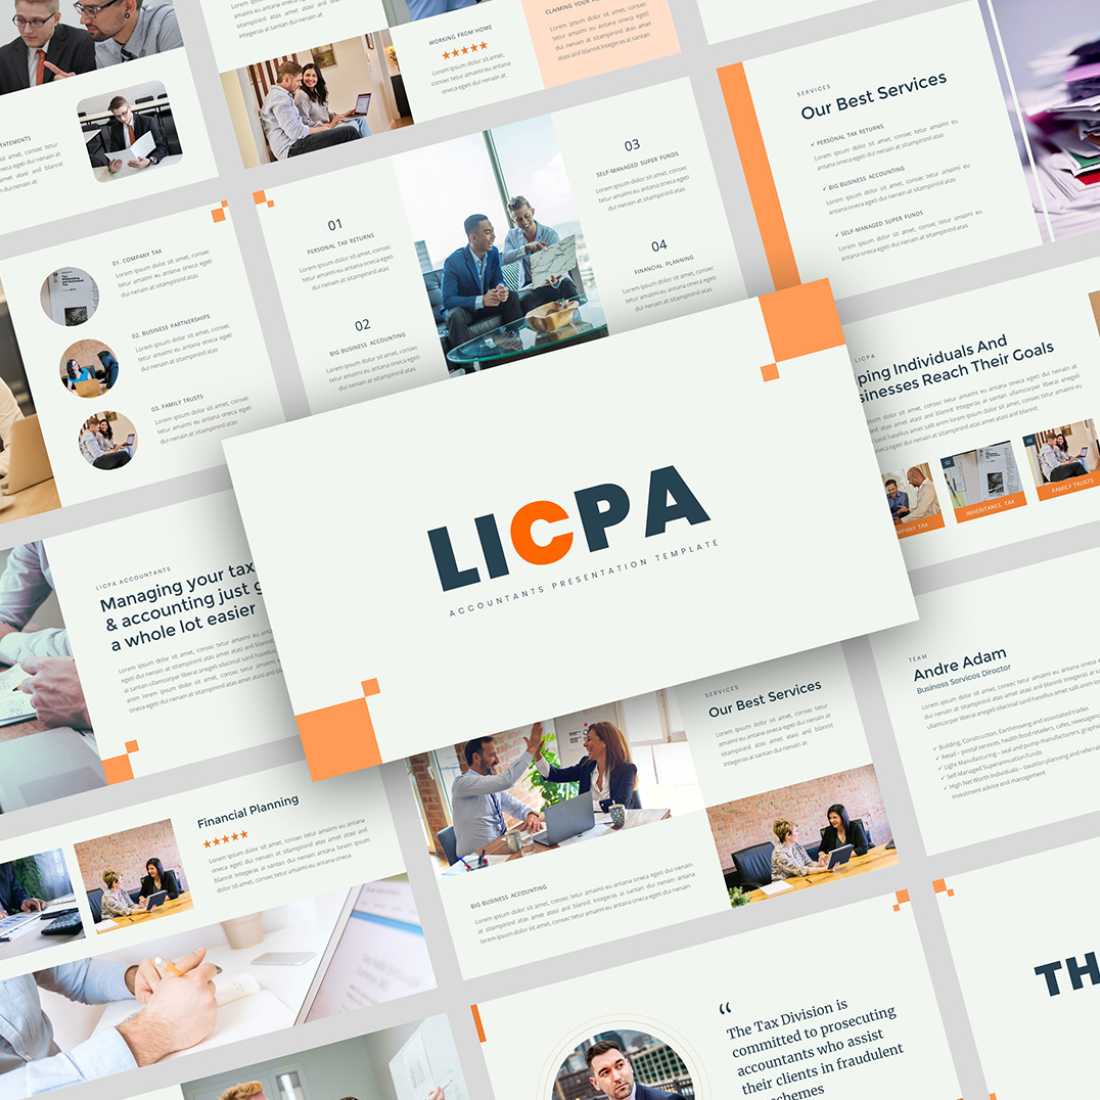 Licpa - Accountants Presentation Keynote Template preview image.